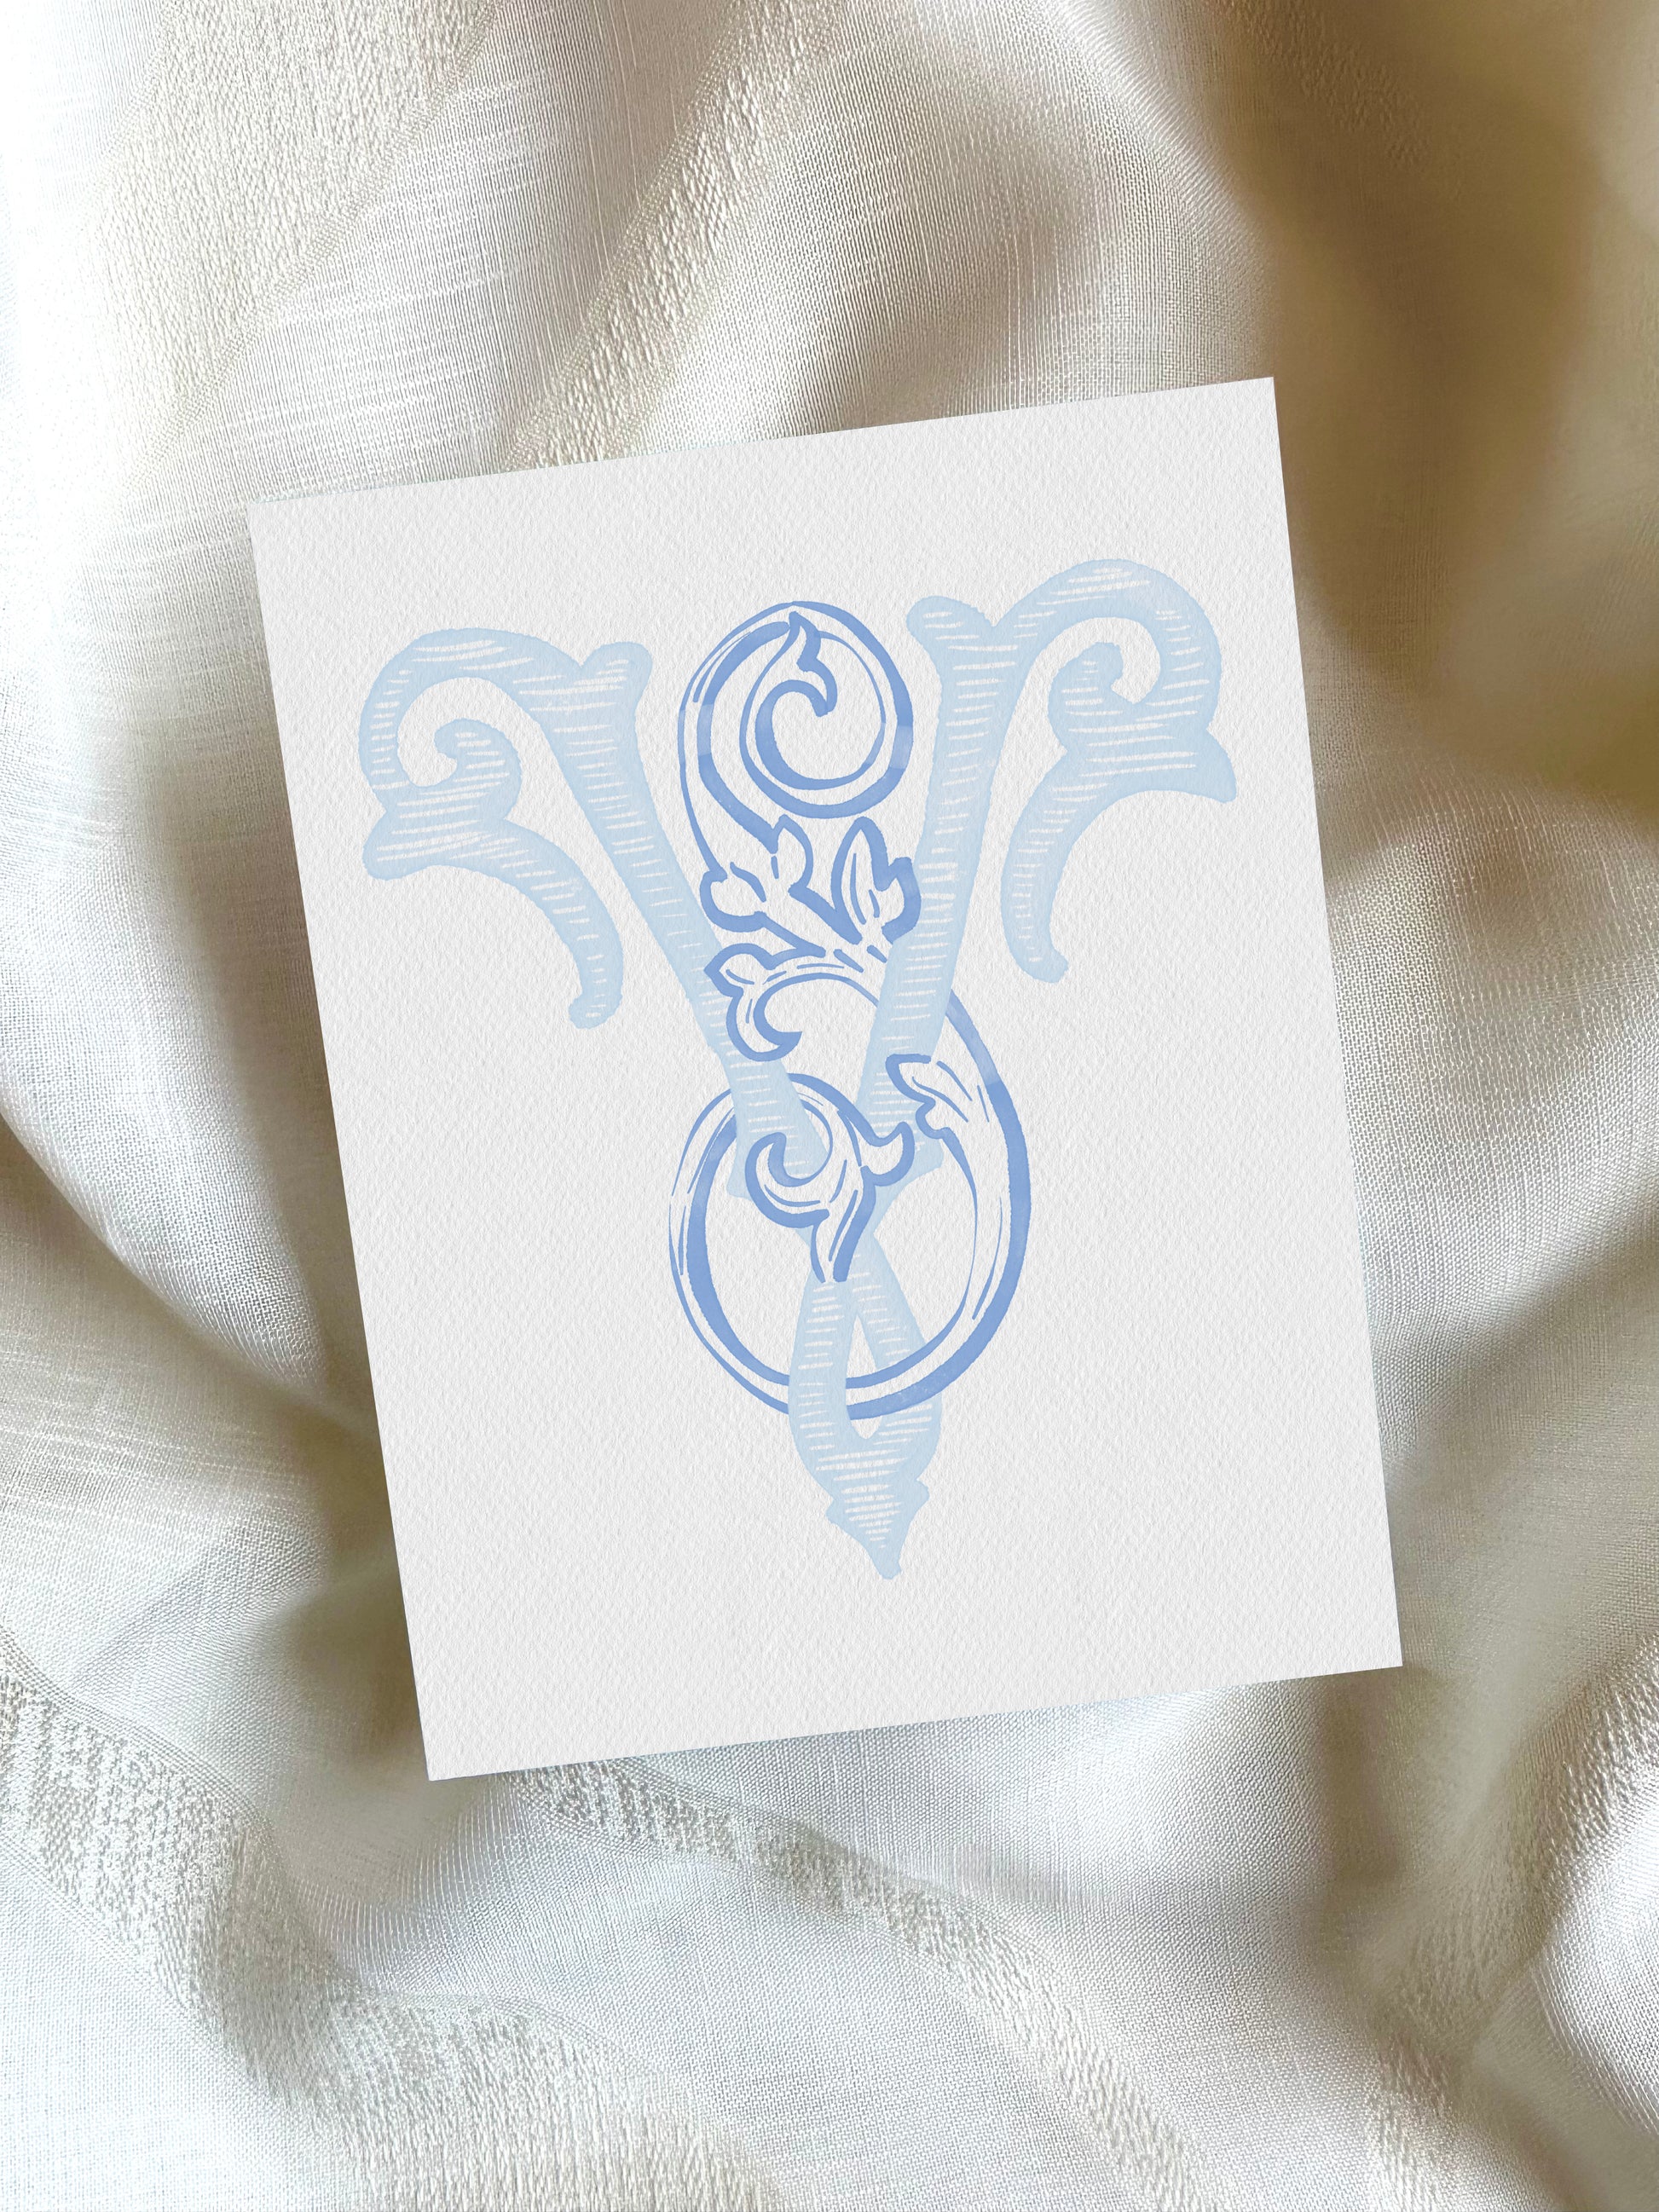 2 Letter Monogram with Letters SV VS | Digital Download - Wedding Monogram SVG, Personal Logo, Wedding Logo for Wedding Invitations The Wedding Crest Lab